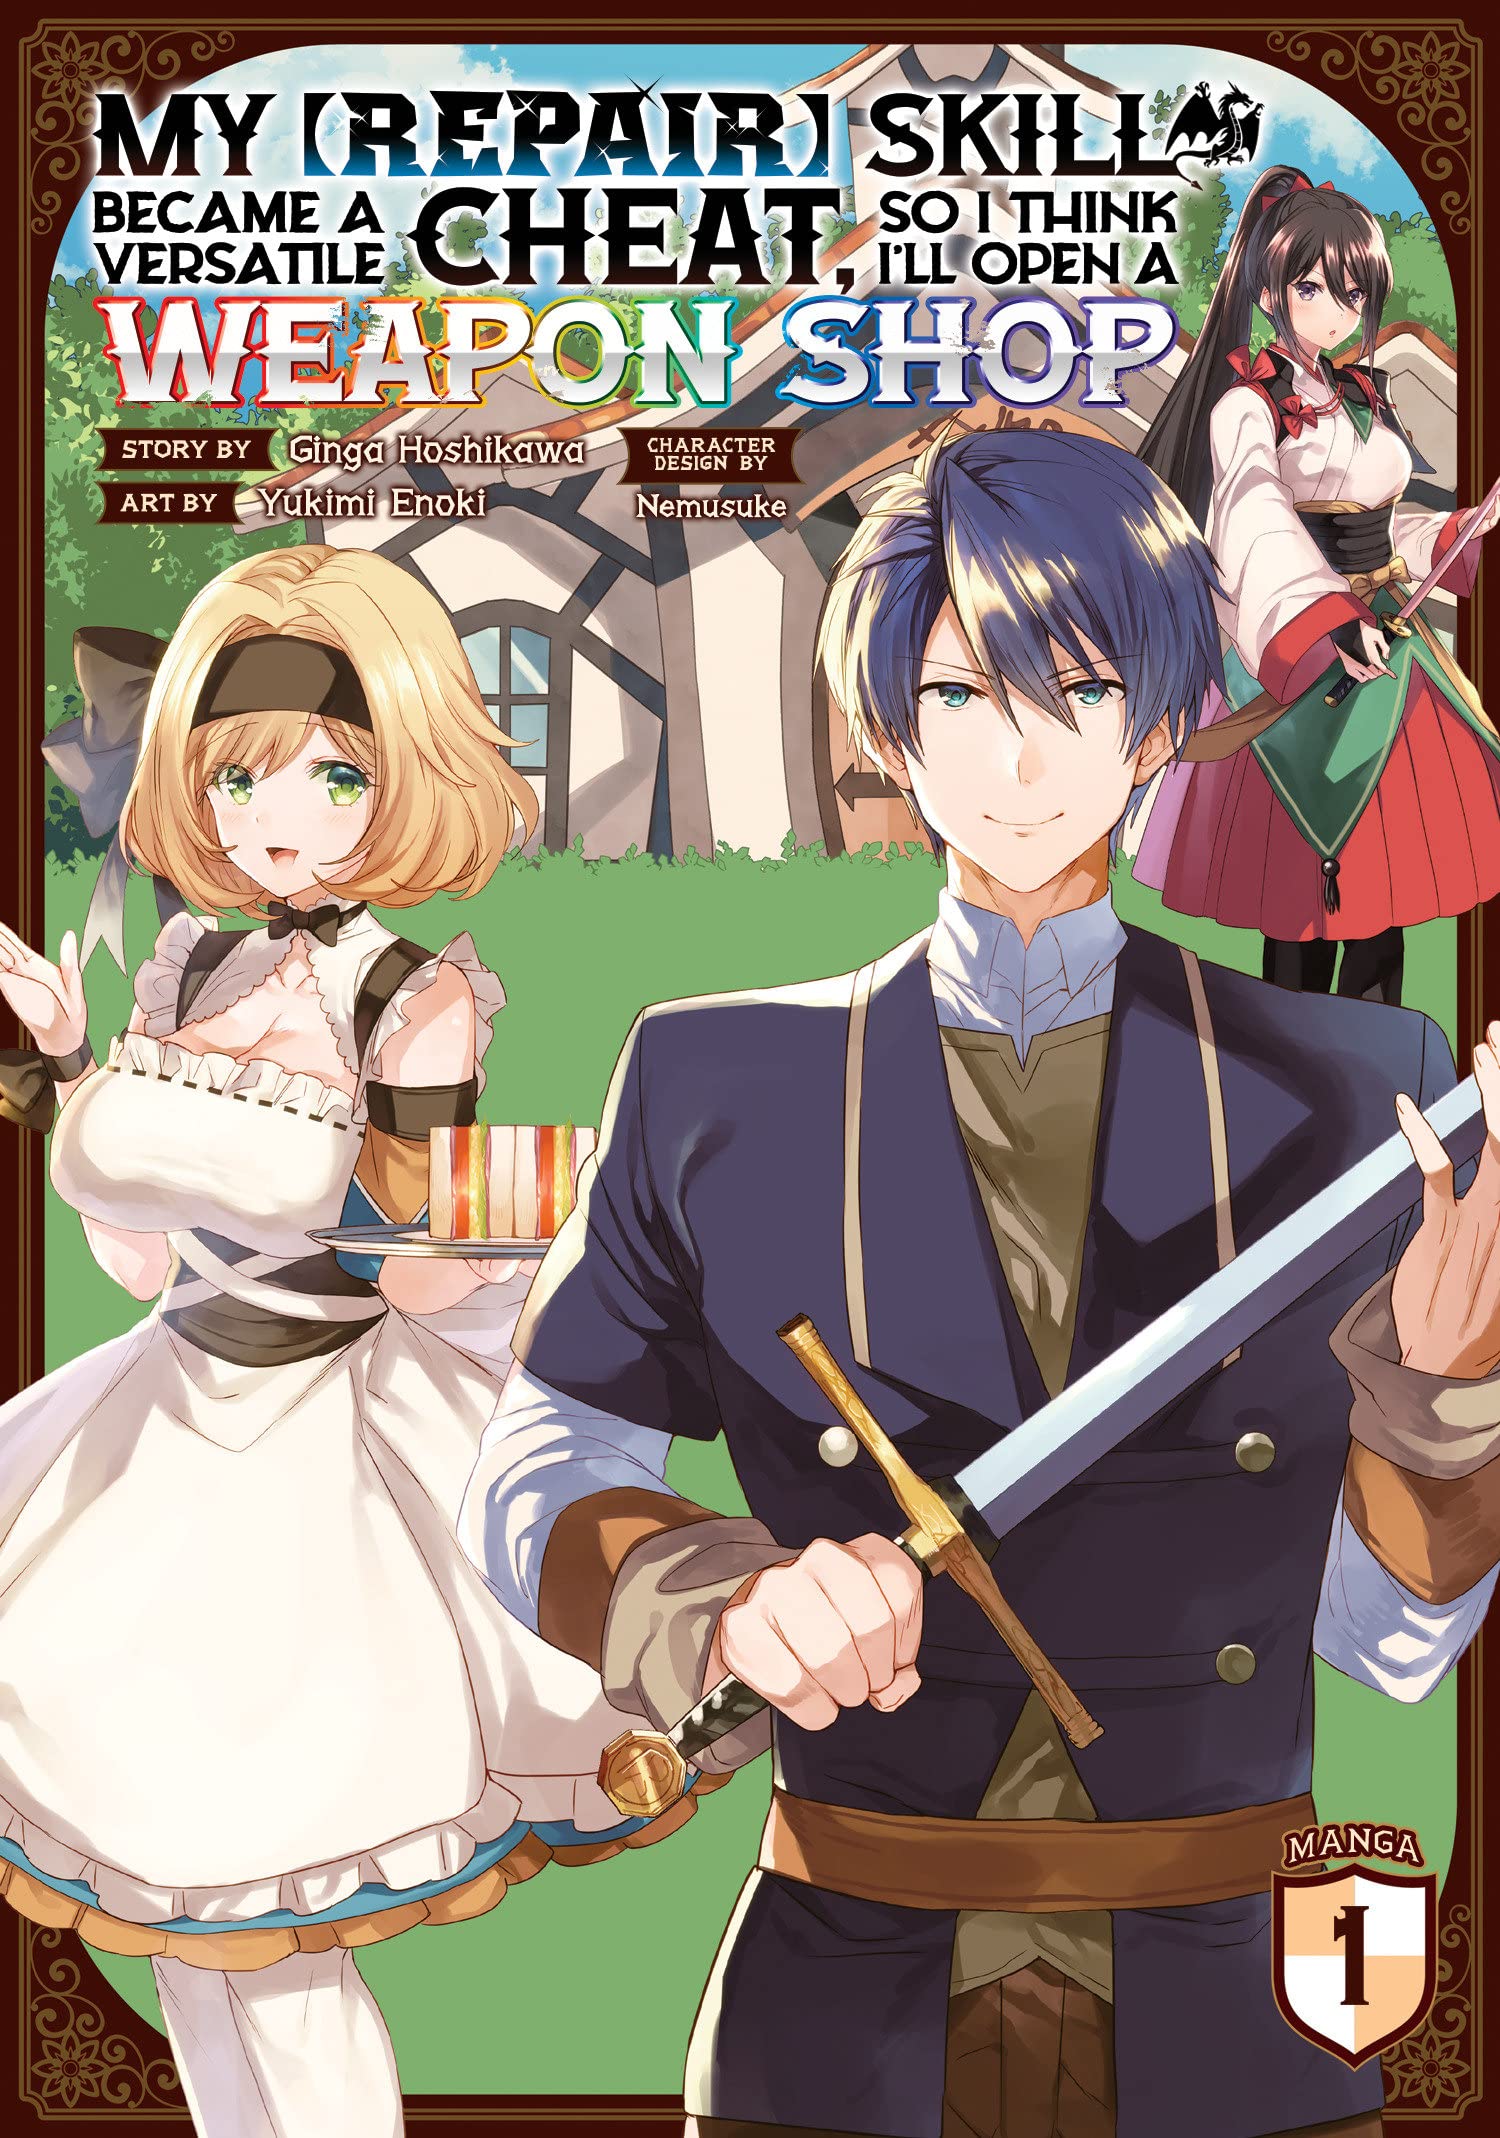 My [Repair] Skill Became a Versatile Cheat, So I Think I'll Open a Weapon Shop (Manga) Vol. 01